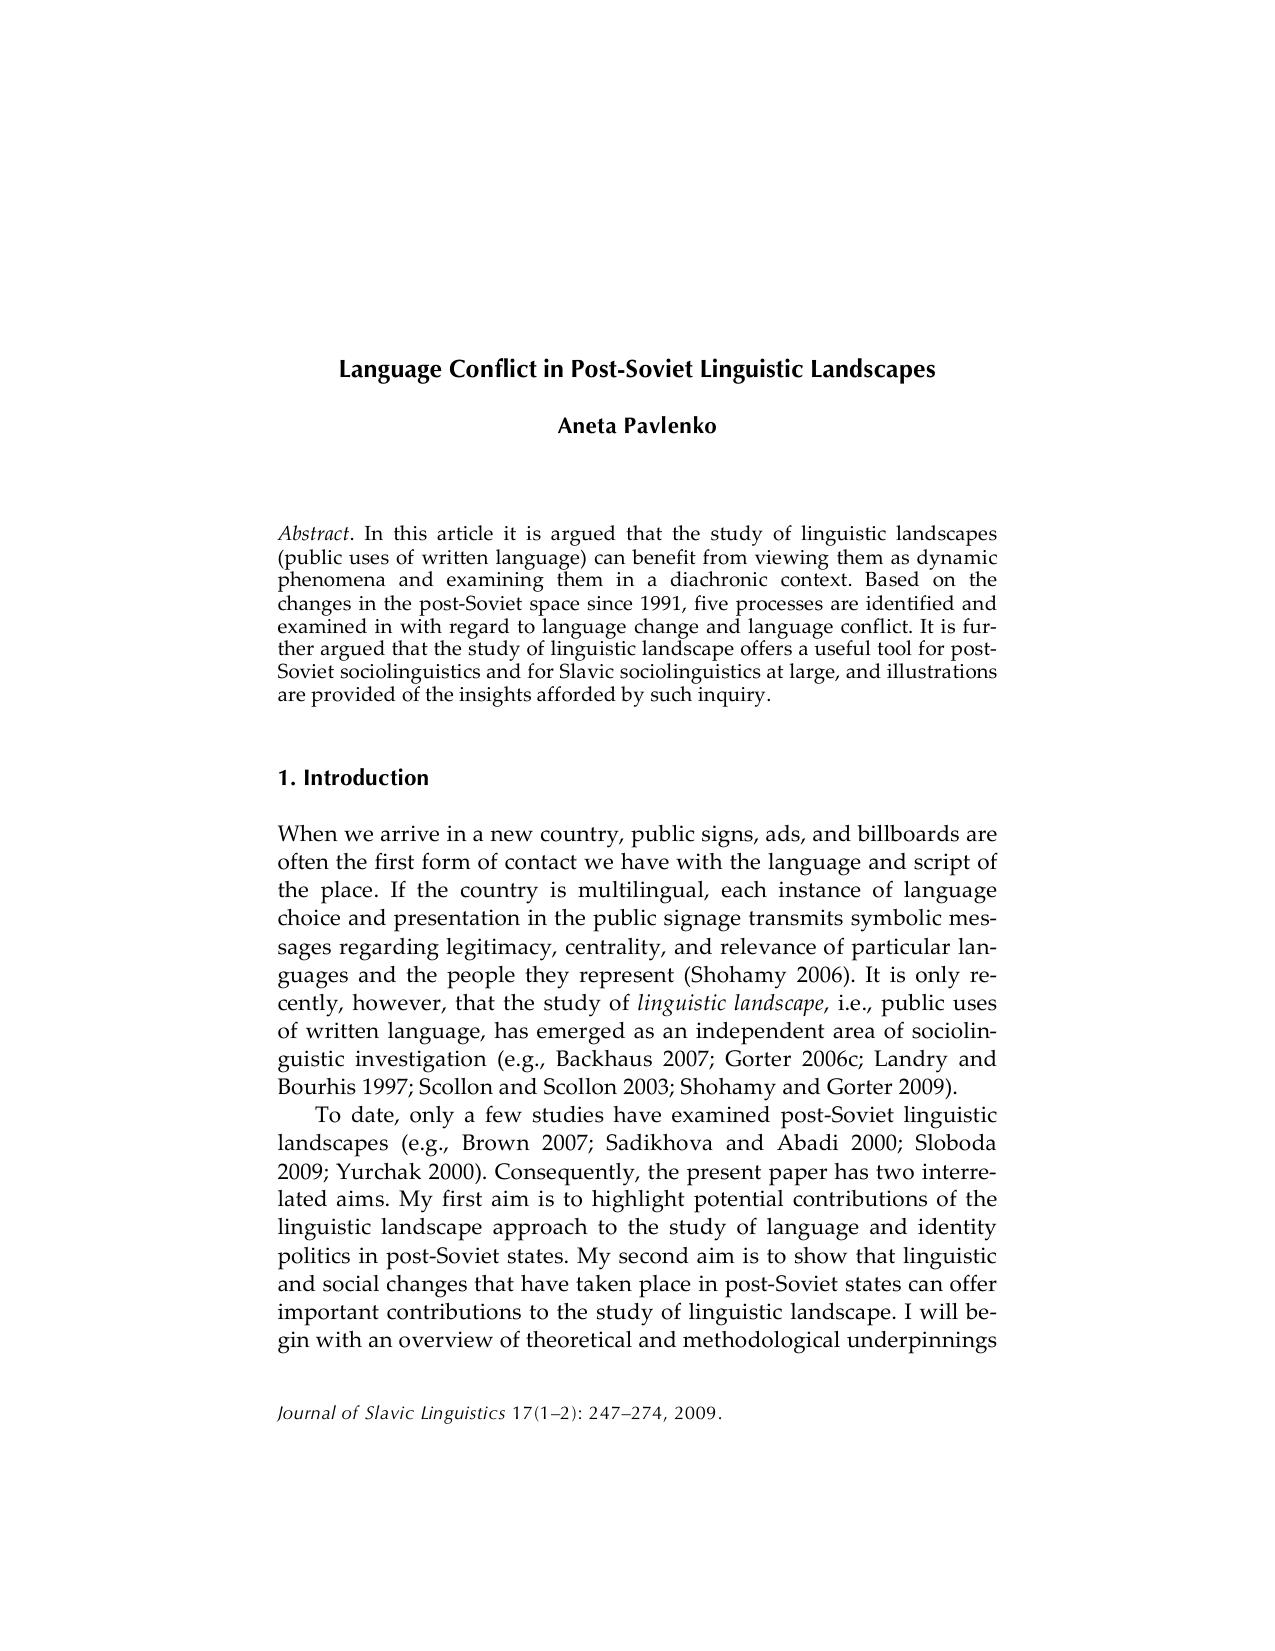 Language Conflict in Post-Soviet Linguistic Landscapes - Paper